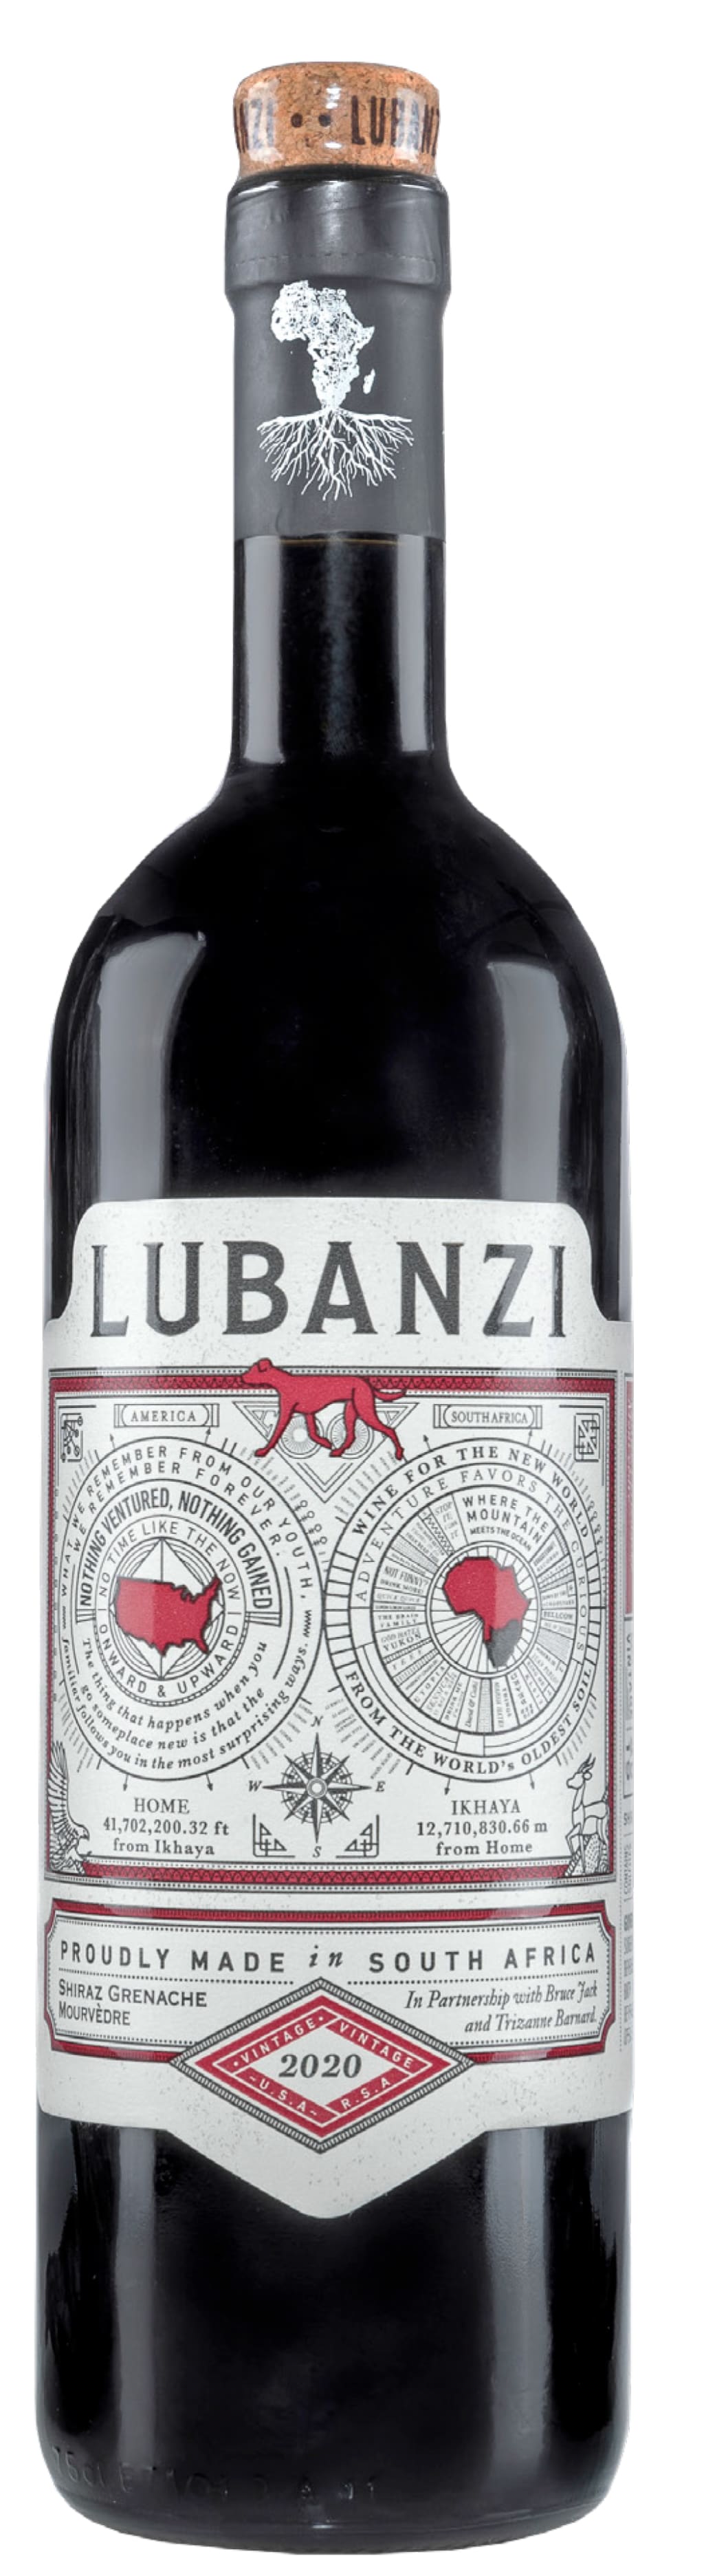 Lubanzi Red Blend 2020 24x12 oz. can 2020